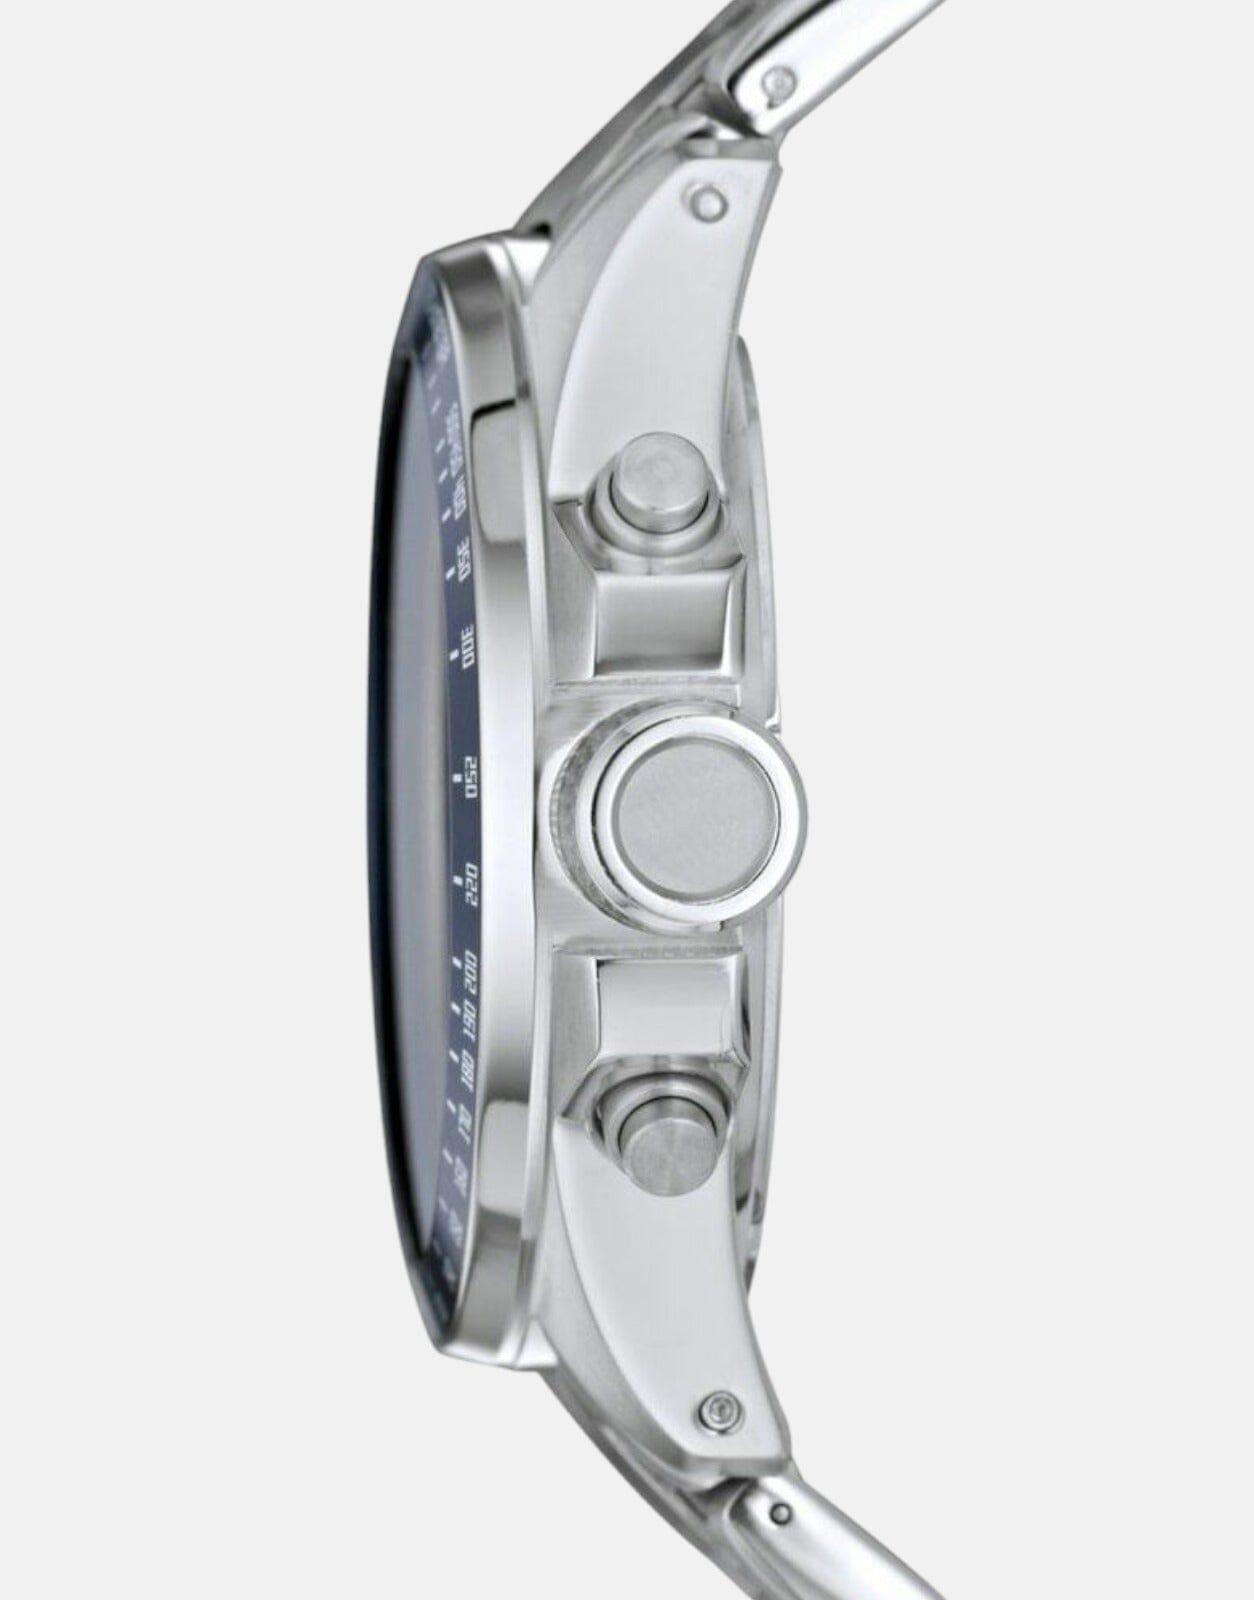 Fossil Decker Stainless Steel Watch - Subwear